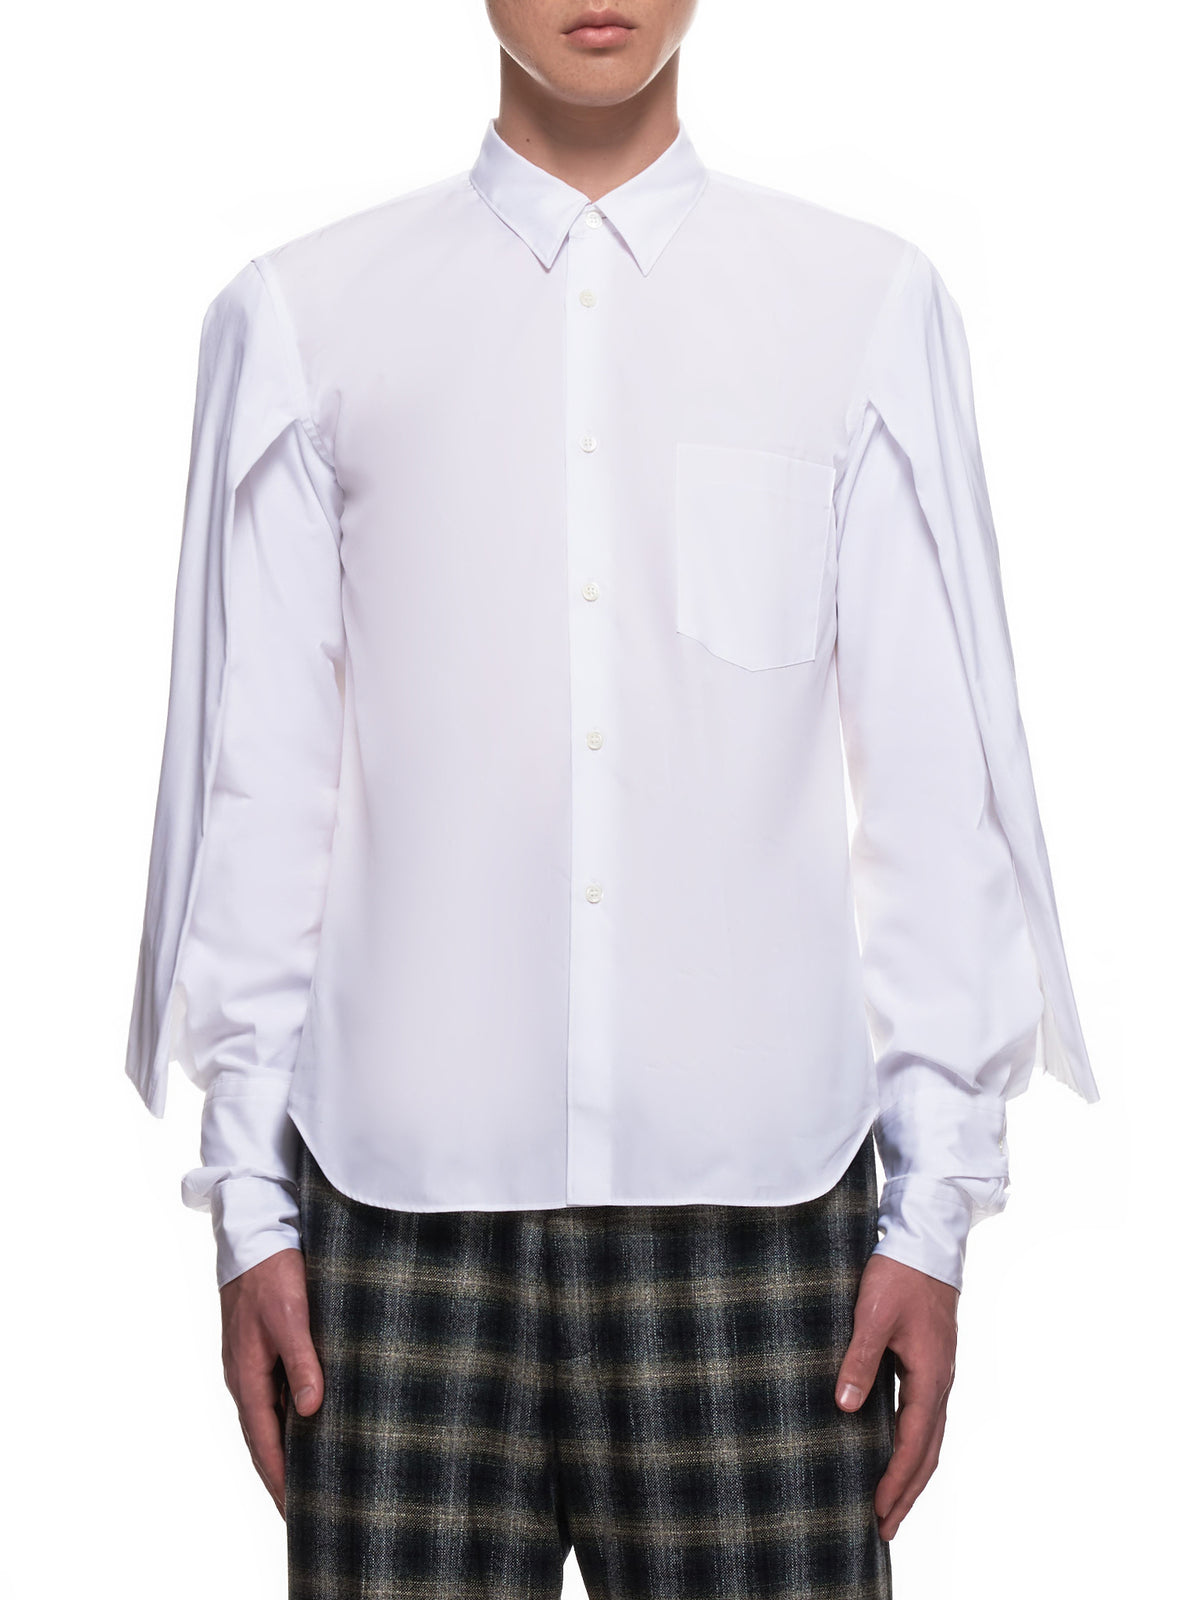 Layered Sleeve Button-Up Shirt (PF-B007-051-WHITE)